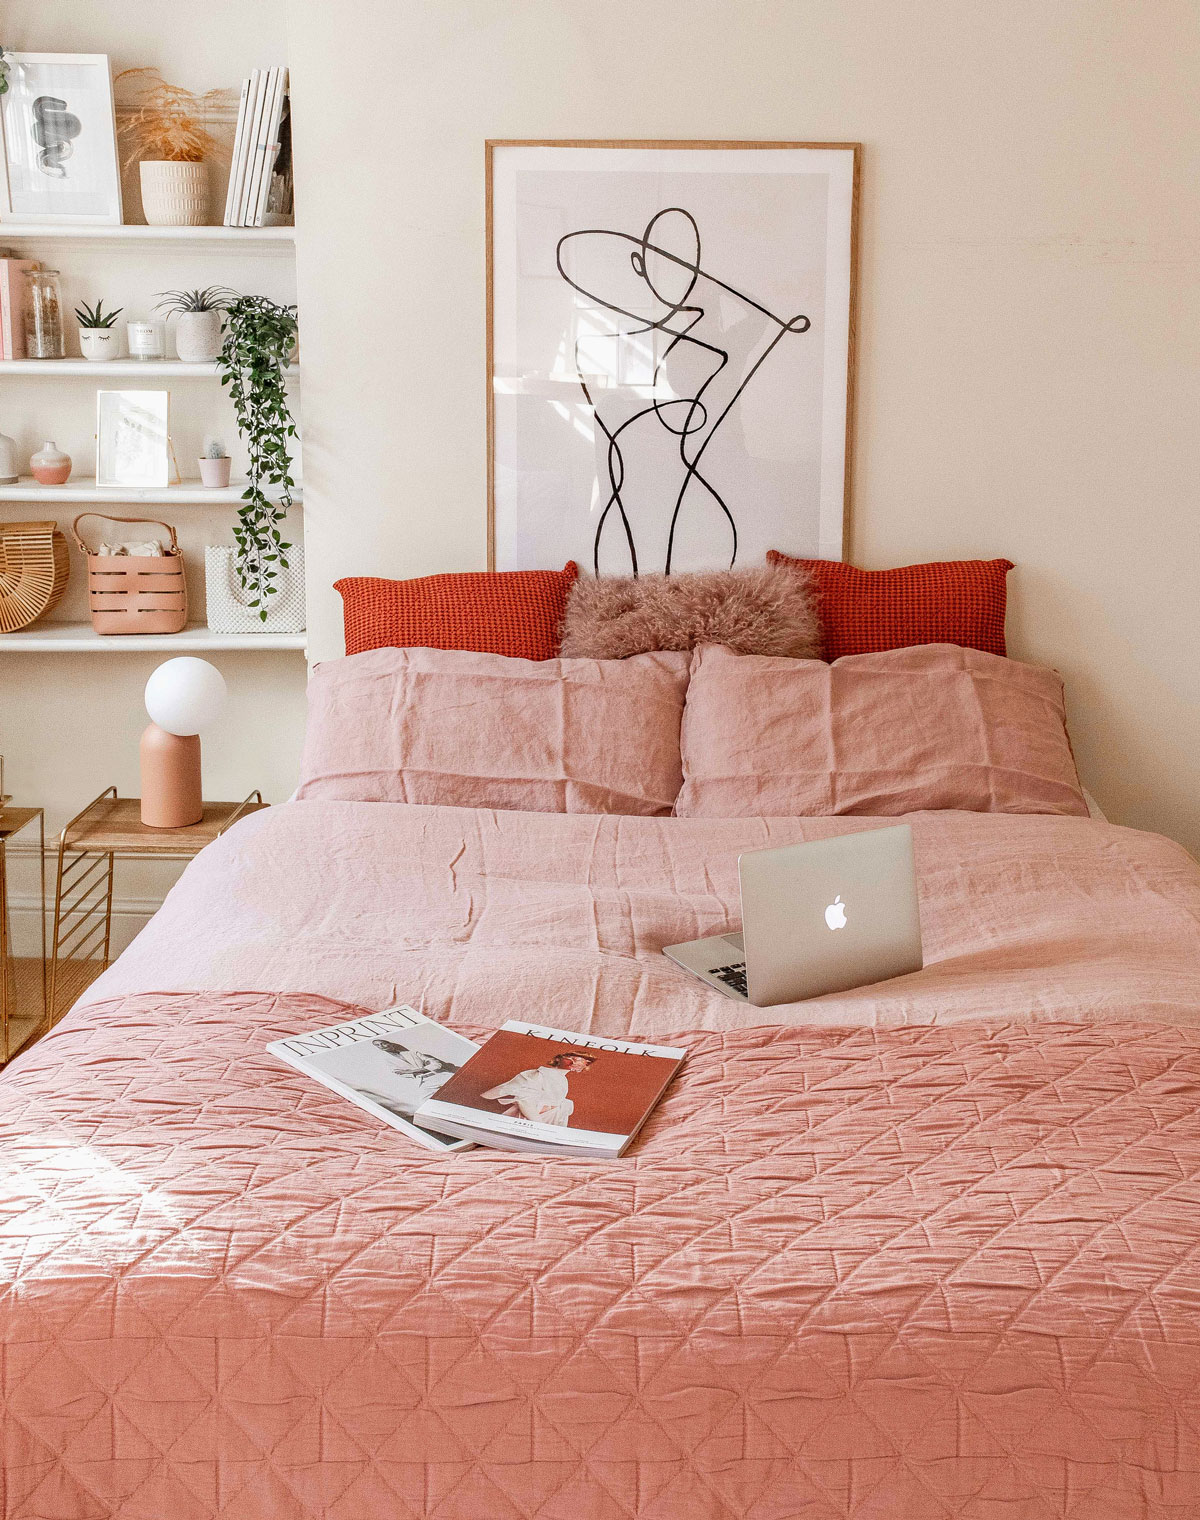 kelsey-heinrichs-@kelseyinlondon-made-bedroom-decoration-bedroom-ideas-bedroom-furniture-bedroom-inspiration-bedroom-styling-2